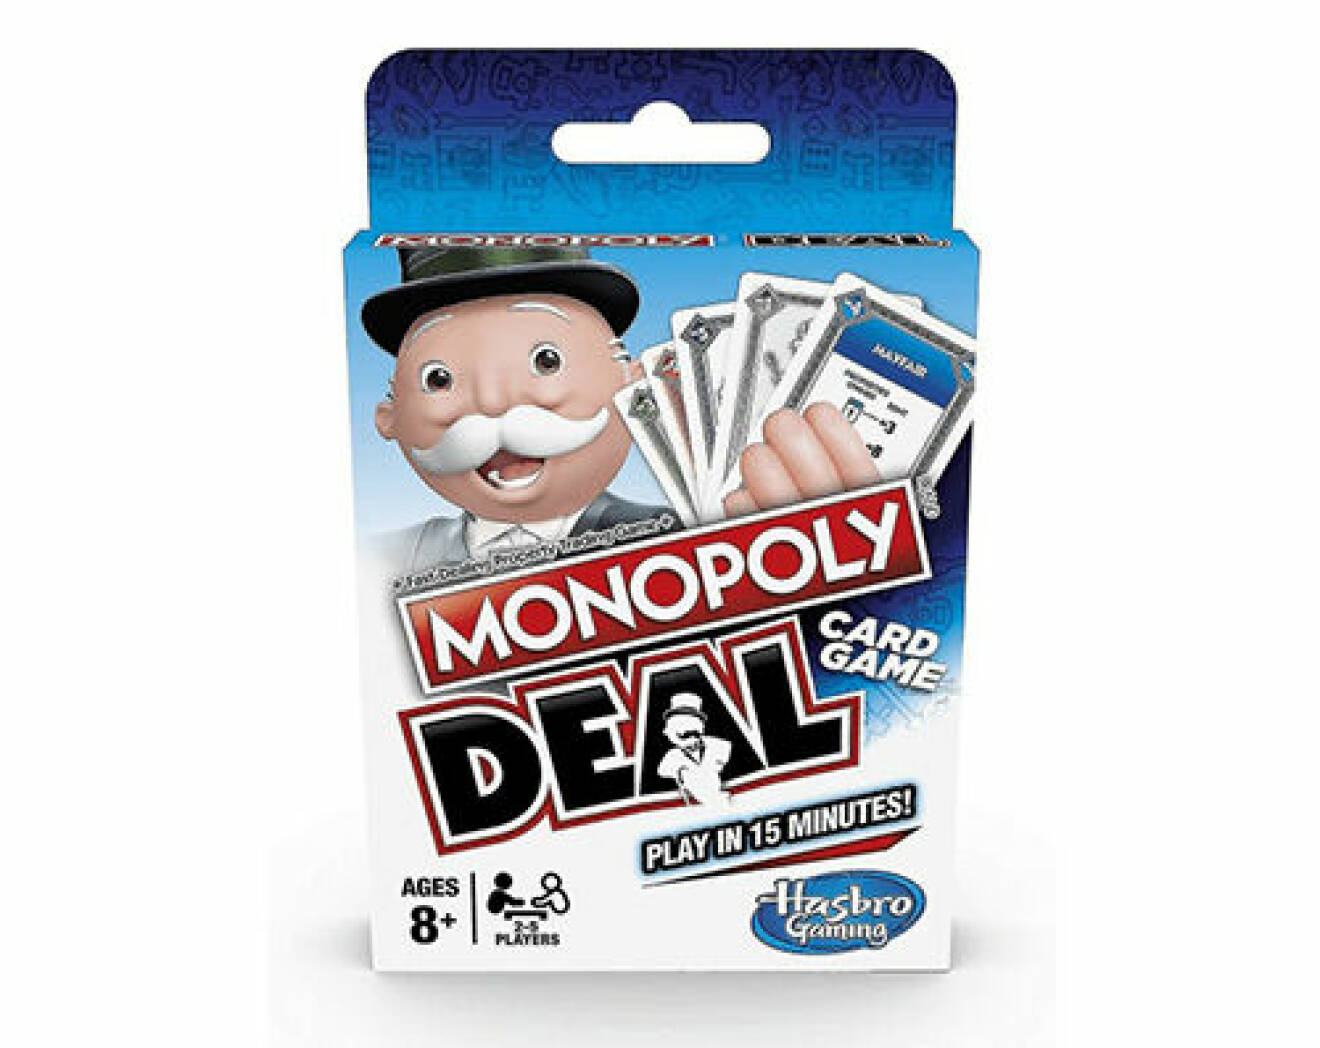 Monopoly deal kortspel